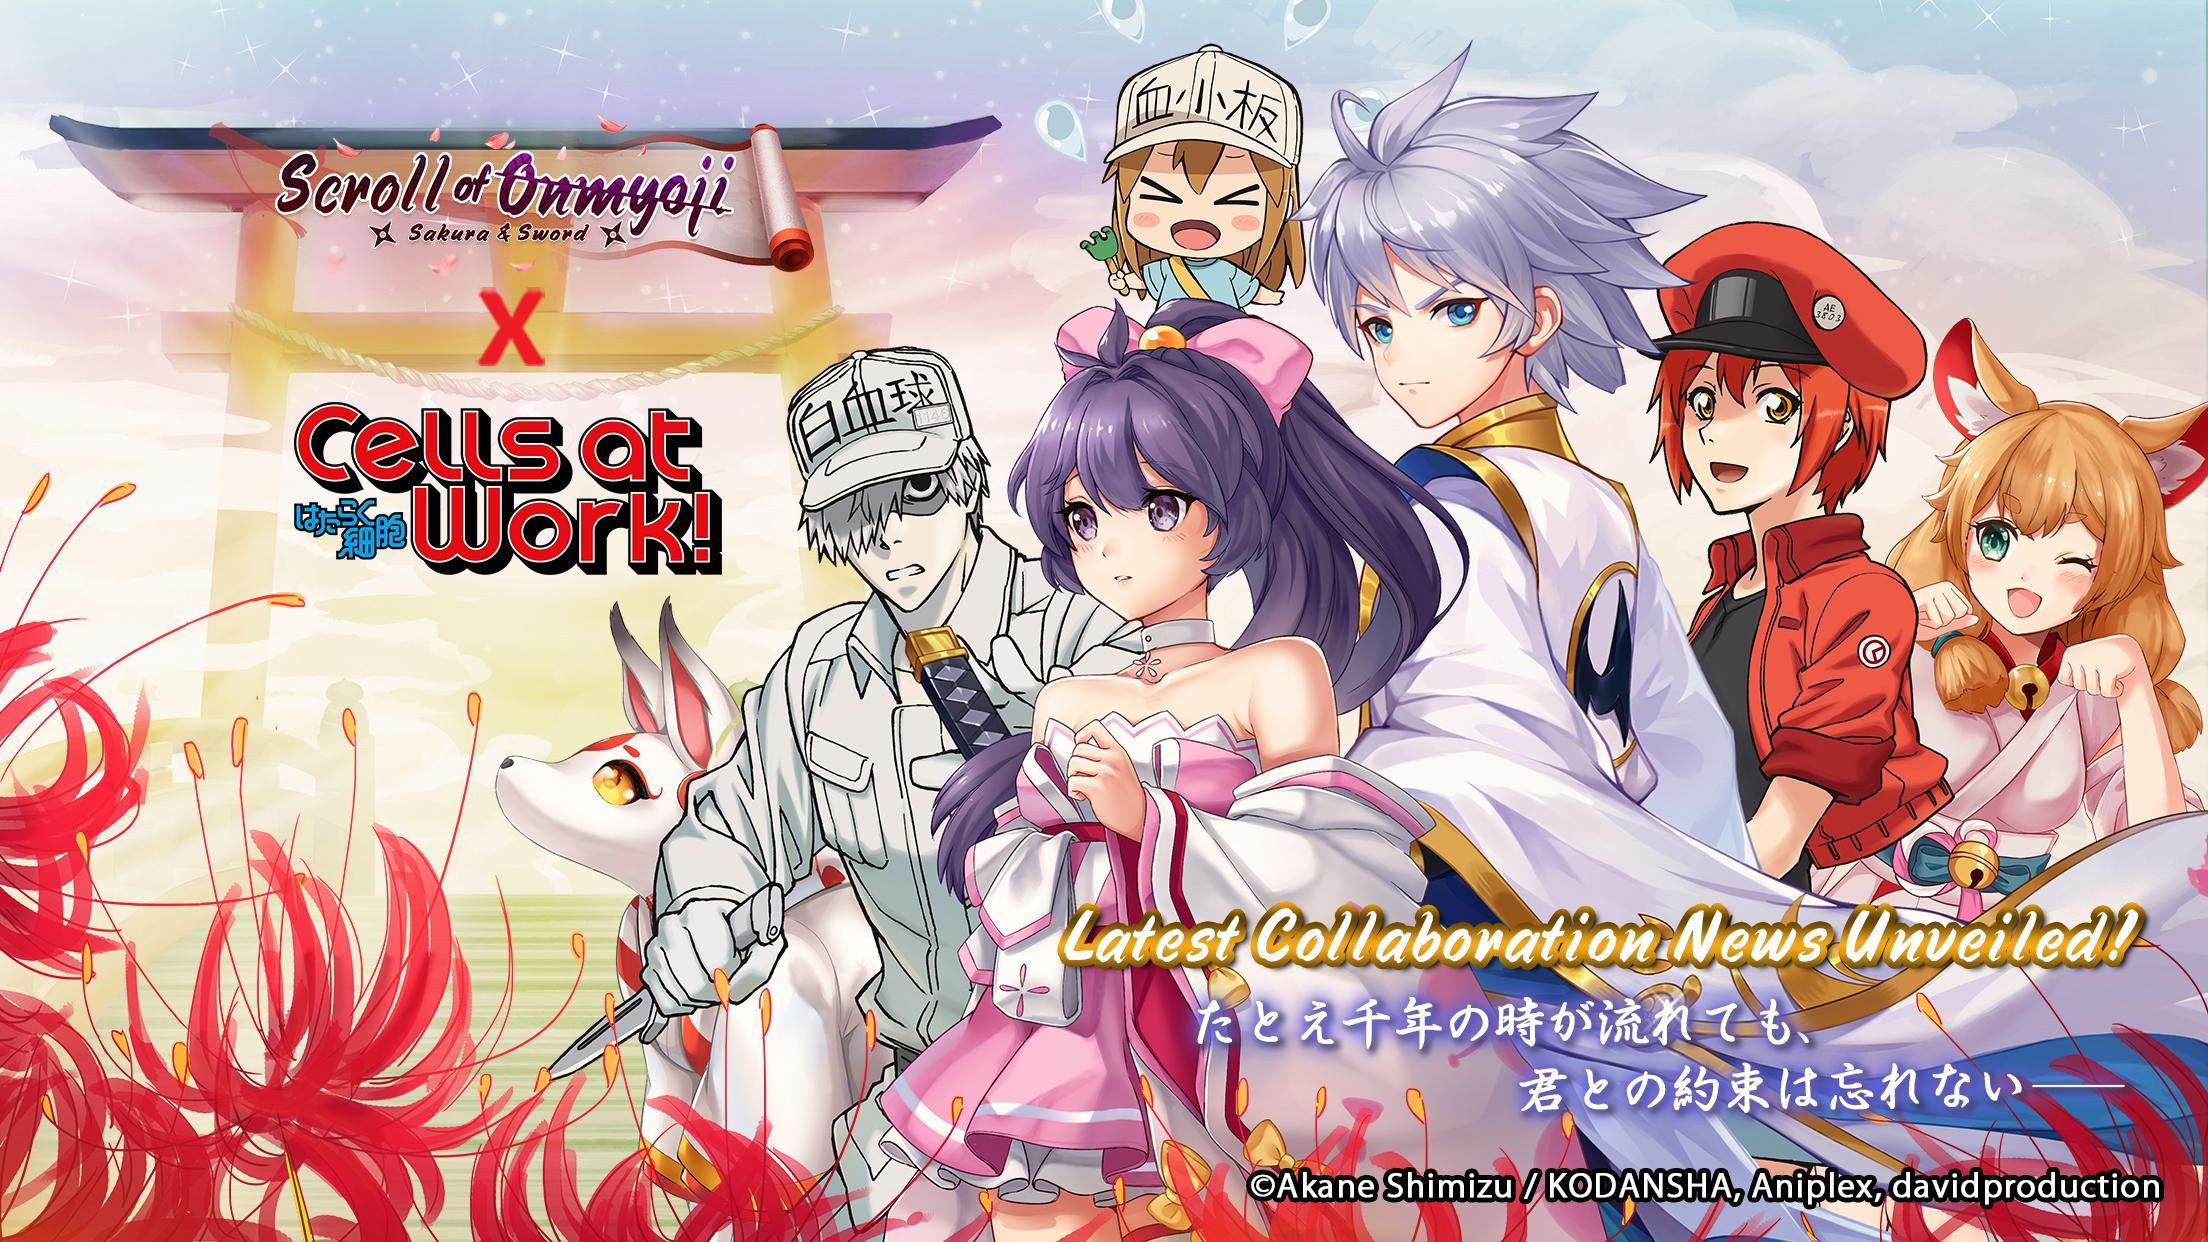 Screenshot 1 of រមូរ Onmyoji: Sakura & Sword 21.0